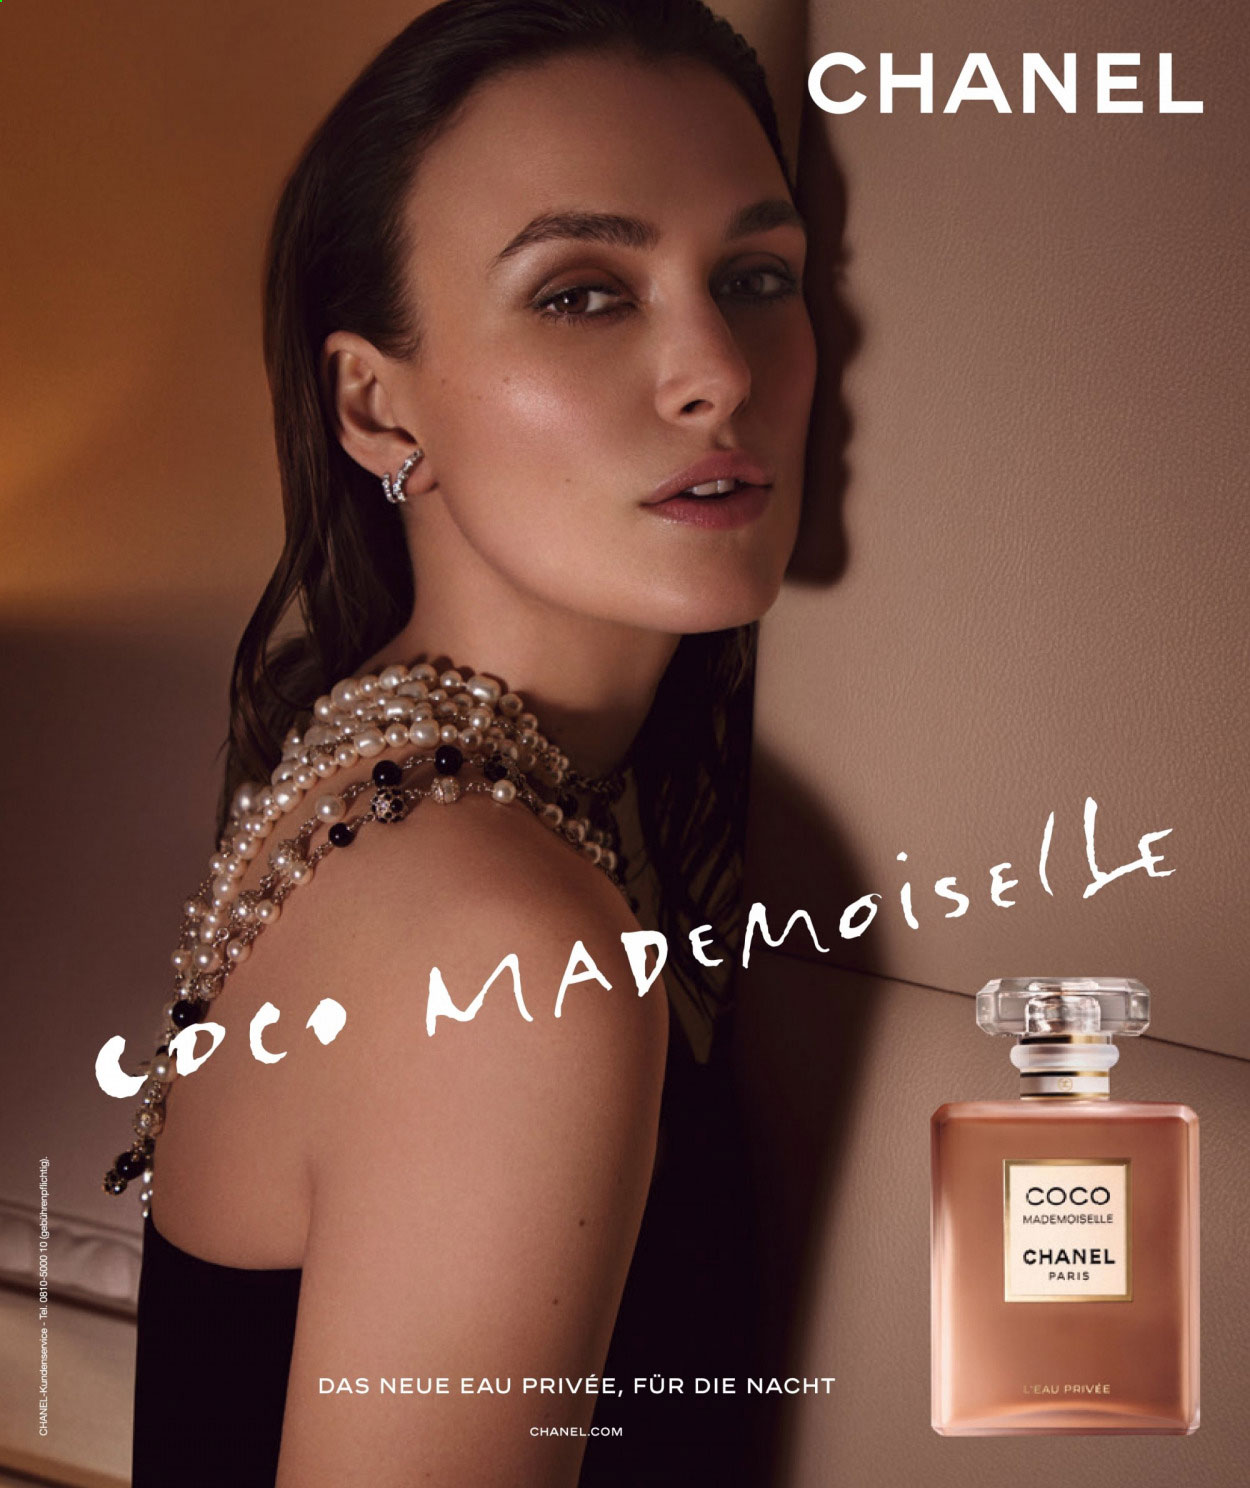 Chanel Coco Mademoiselle L'Eau Privee ad 2020 Keira Knightley